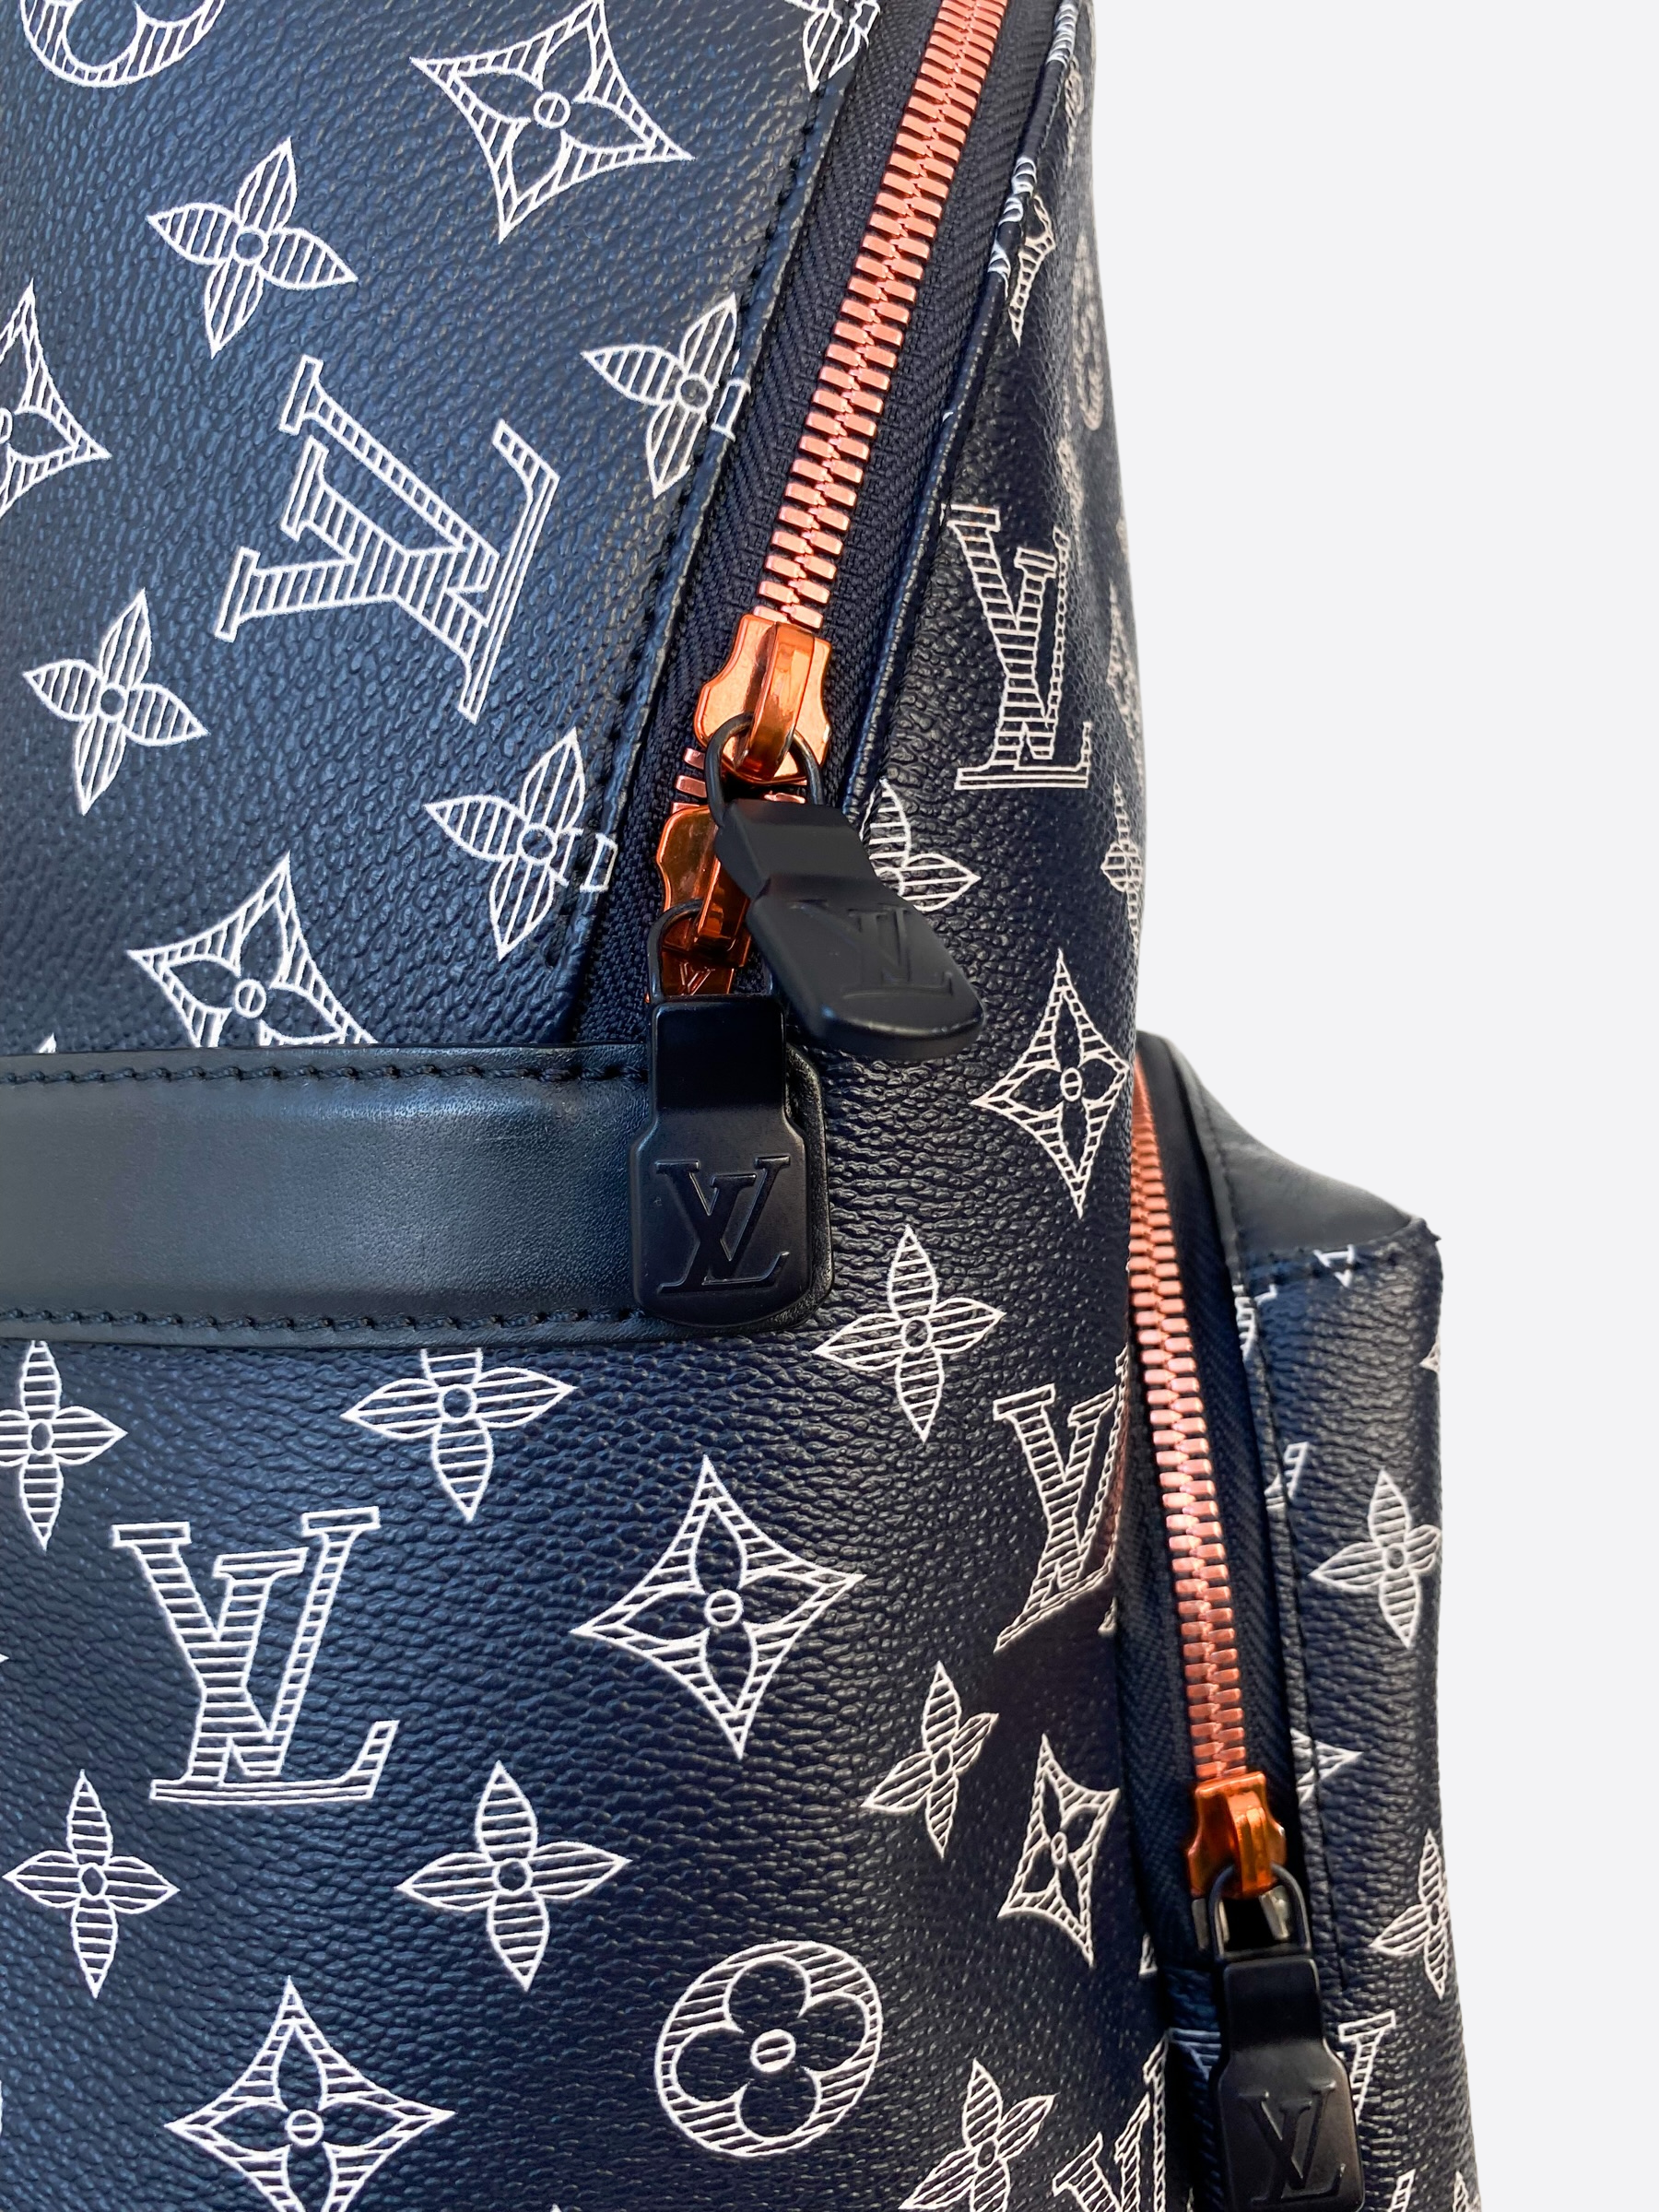 Louis Vuitton Kim Jones Limited Edition Upside-Down Speedy